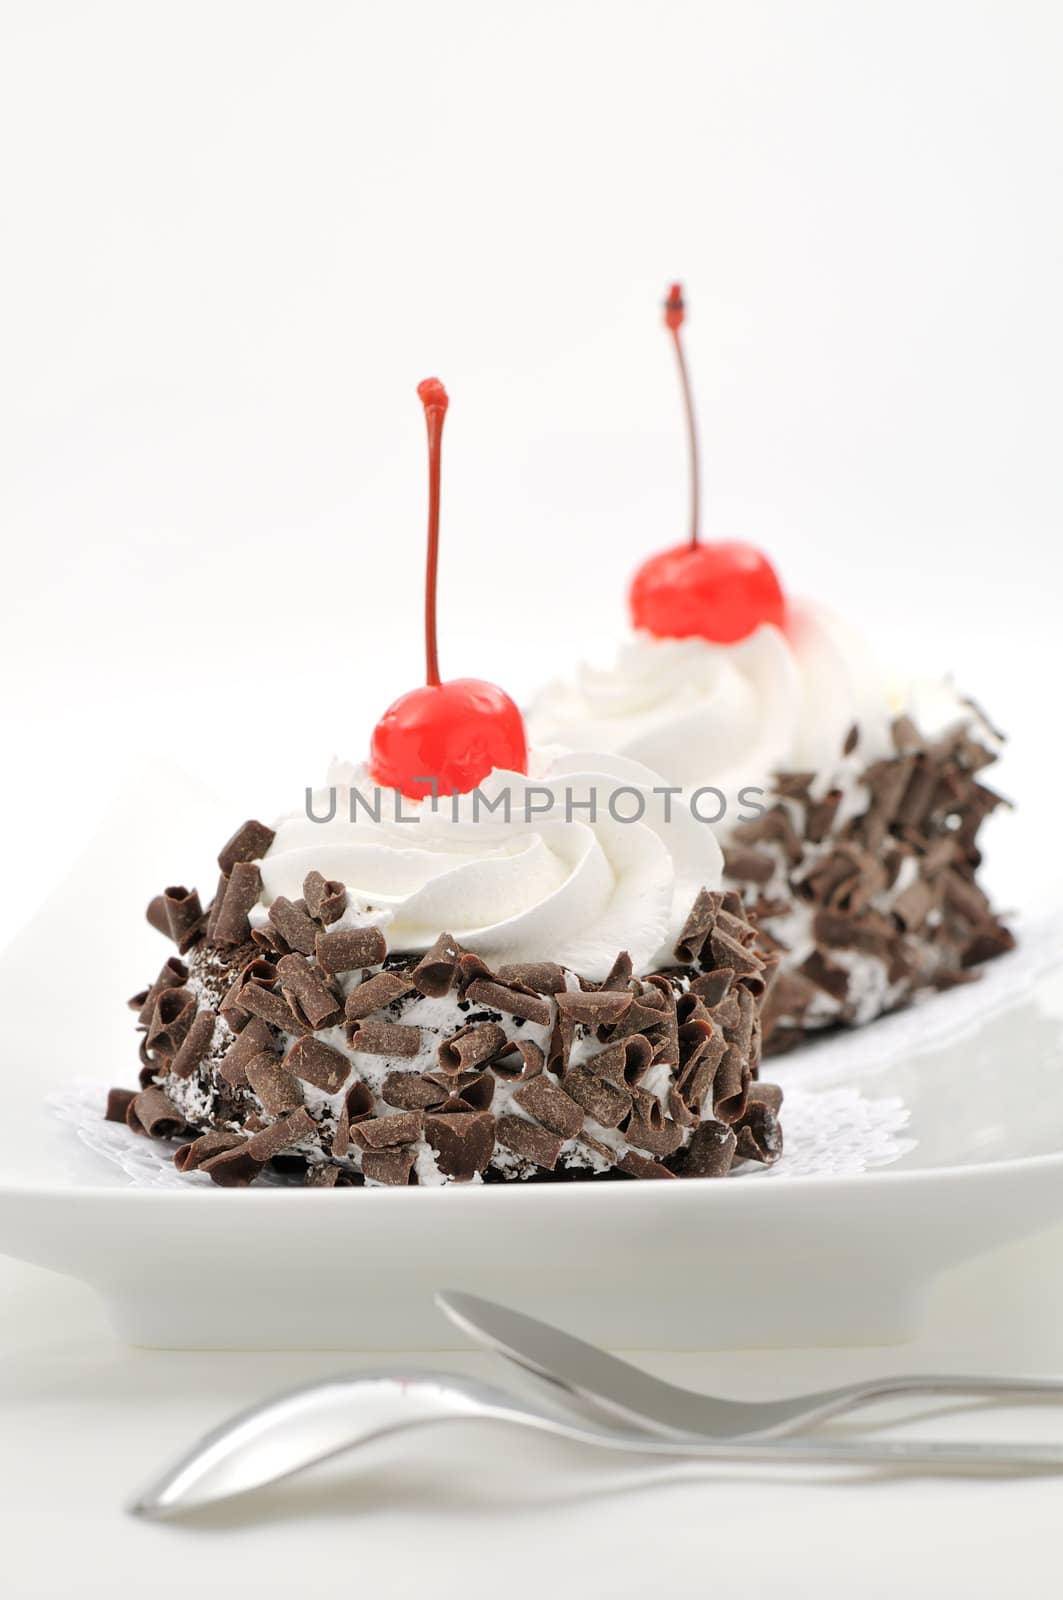 Cream and chocolate cakes by Hbak